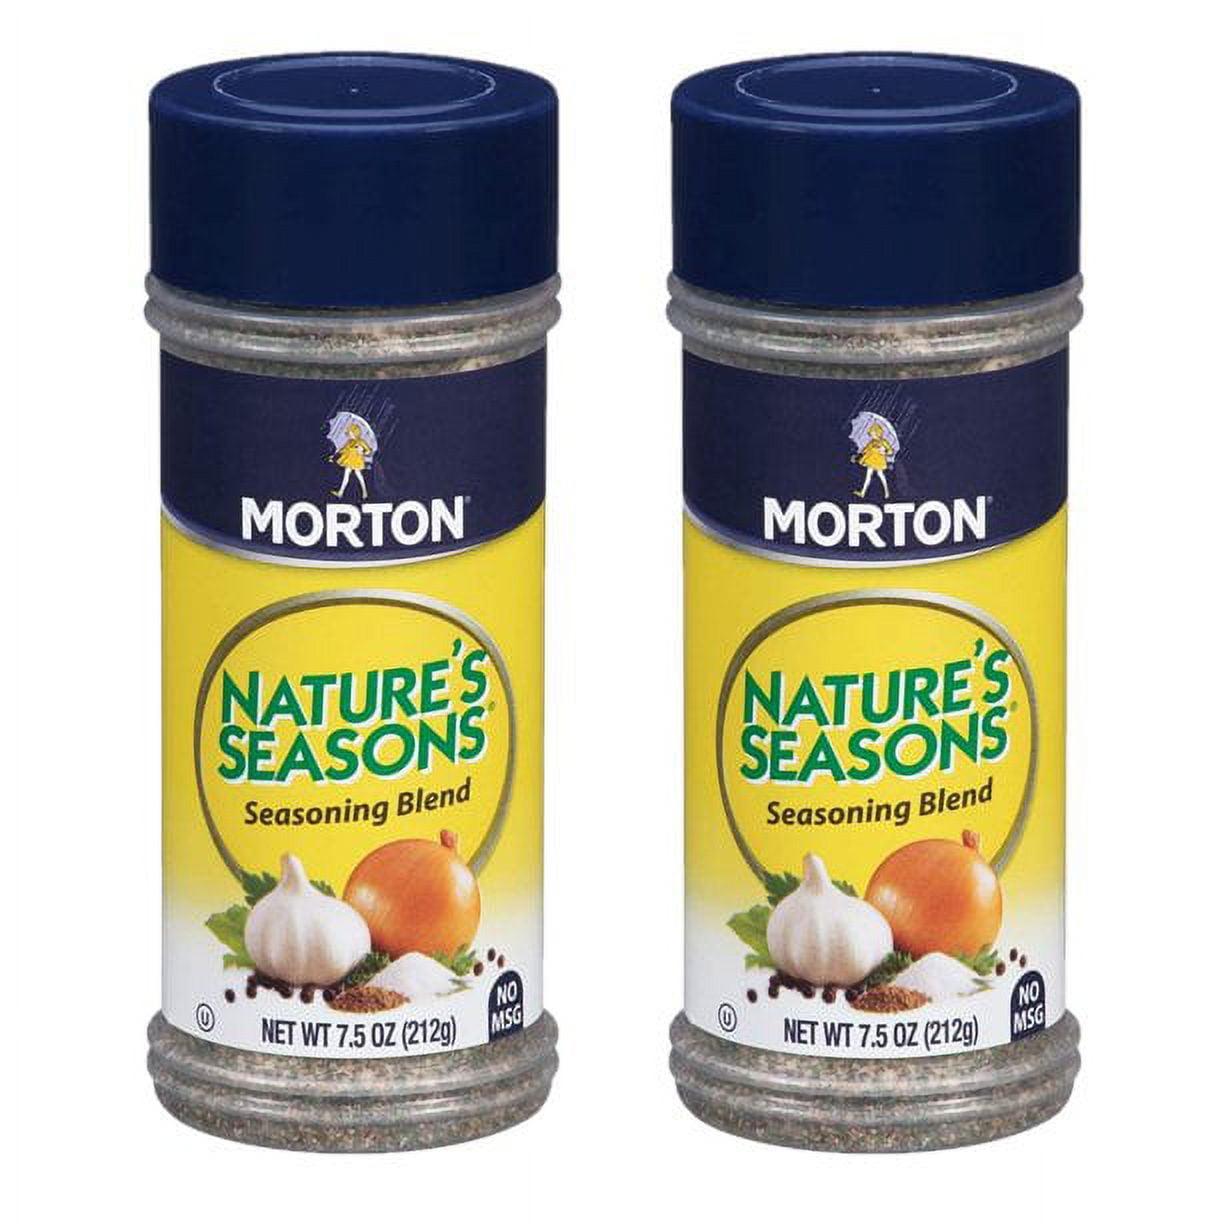 Morton Natures Seasons Seasoning Blend, 7.5 Ounce -- 12 per case